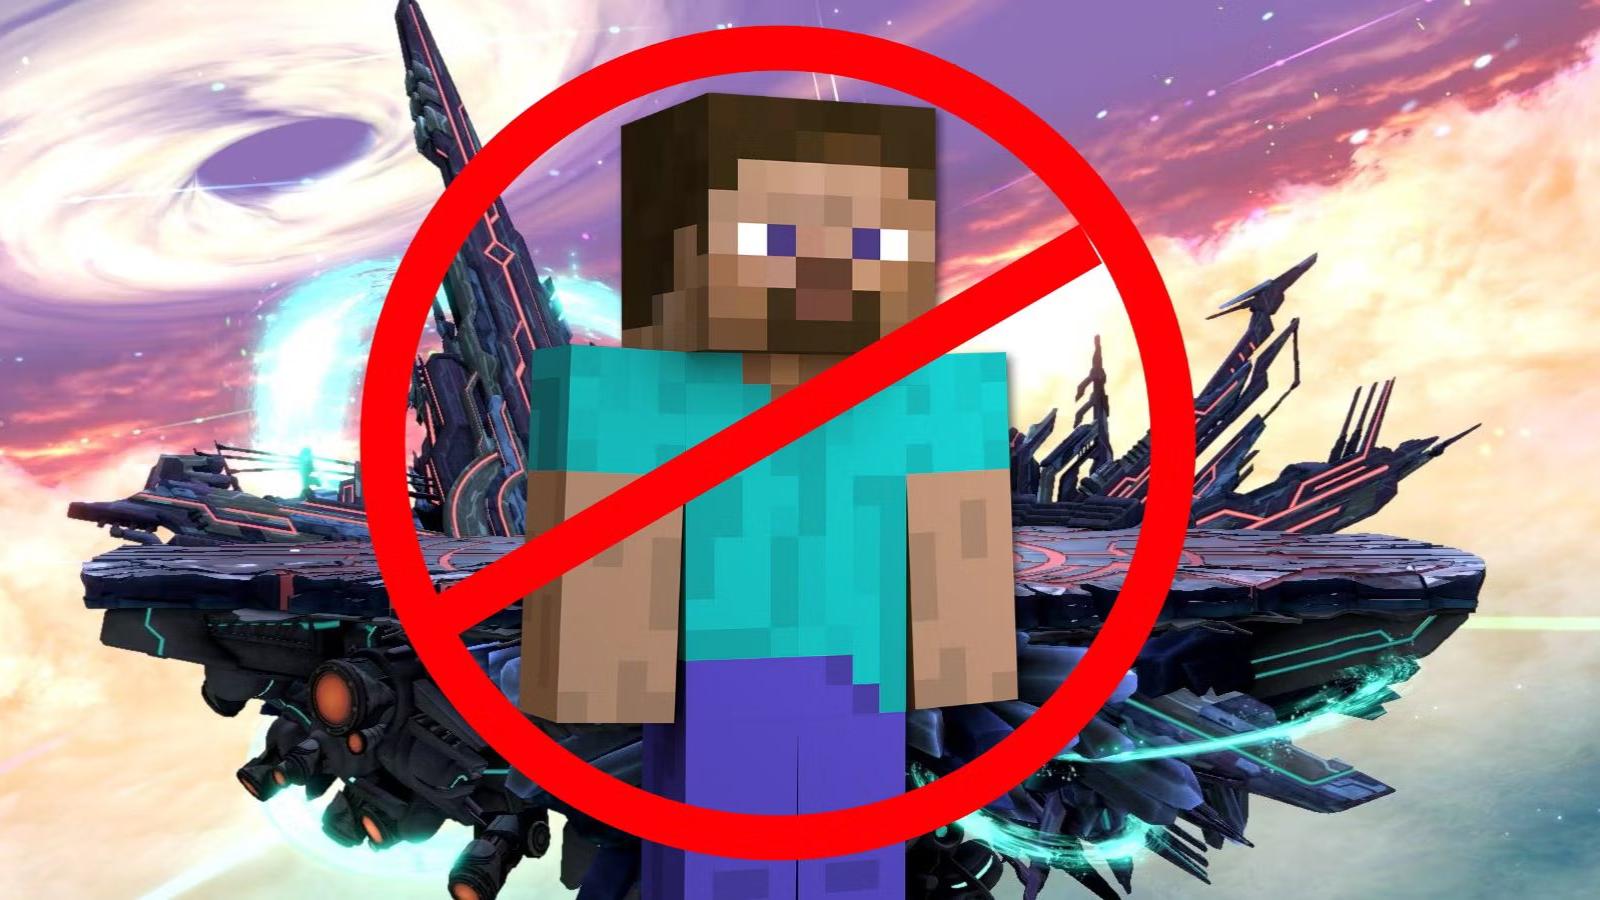 SSBU's Minecraft Steve Banned from Let's Make Big Moves 2024